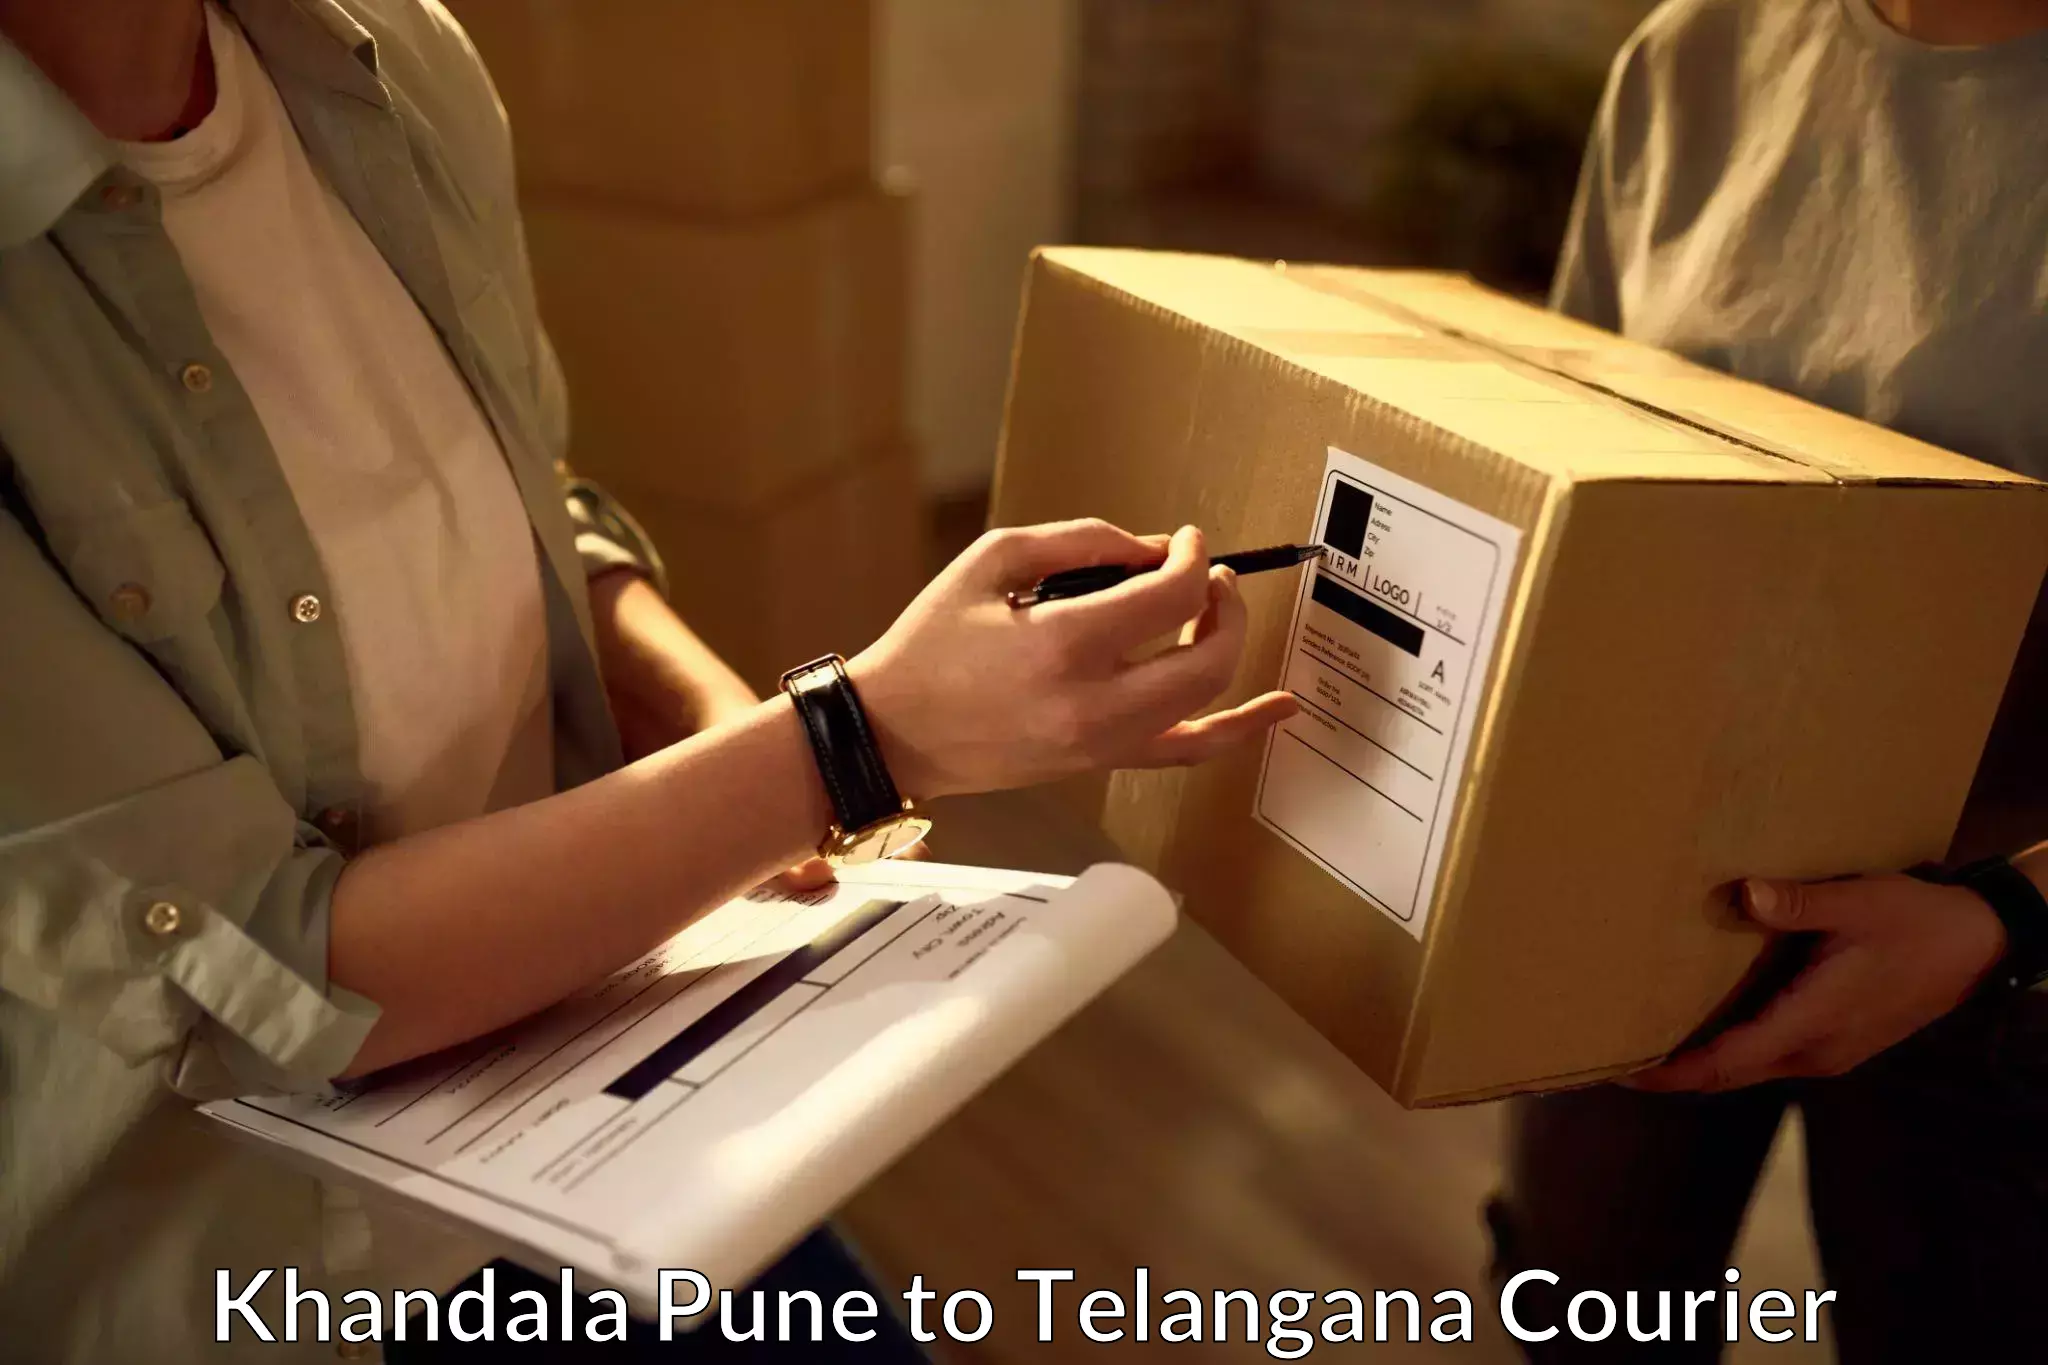 24/7 courier service Khandala Pune to Yellareddipet